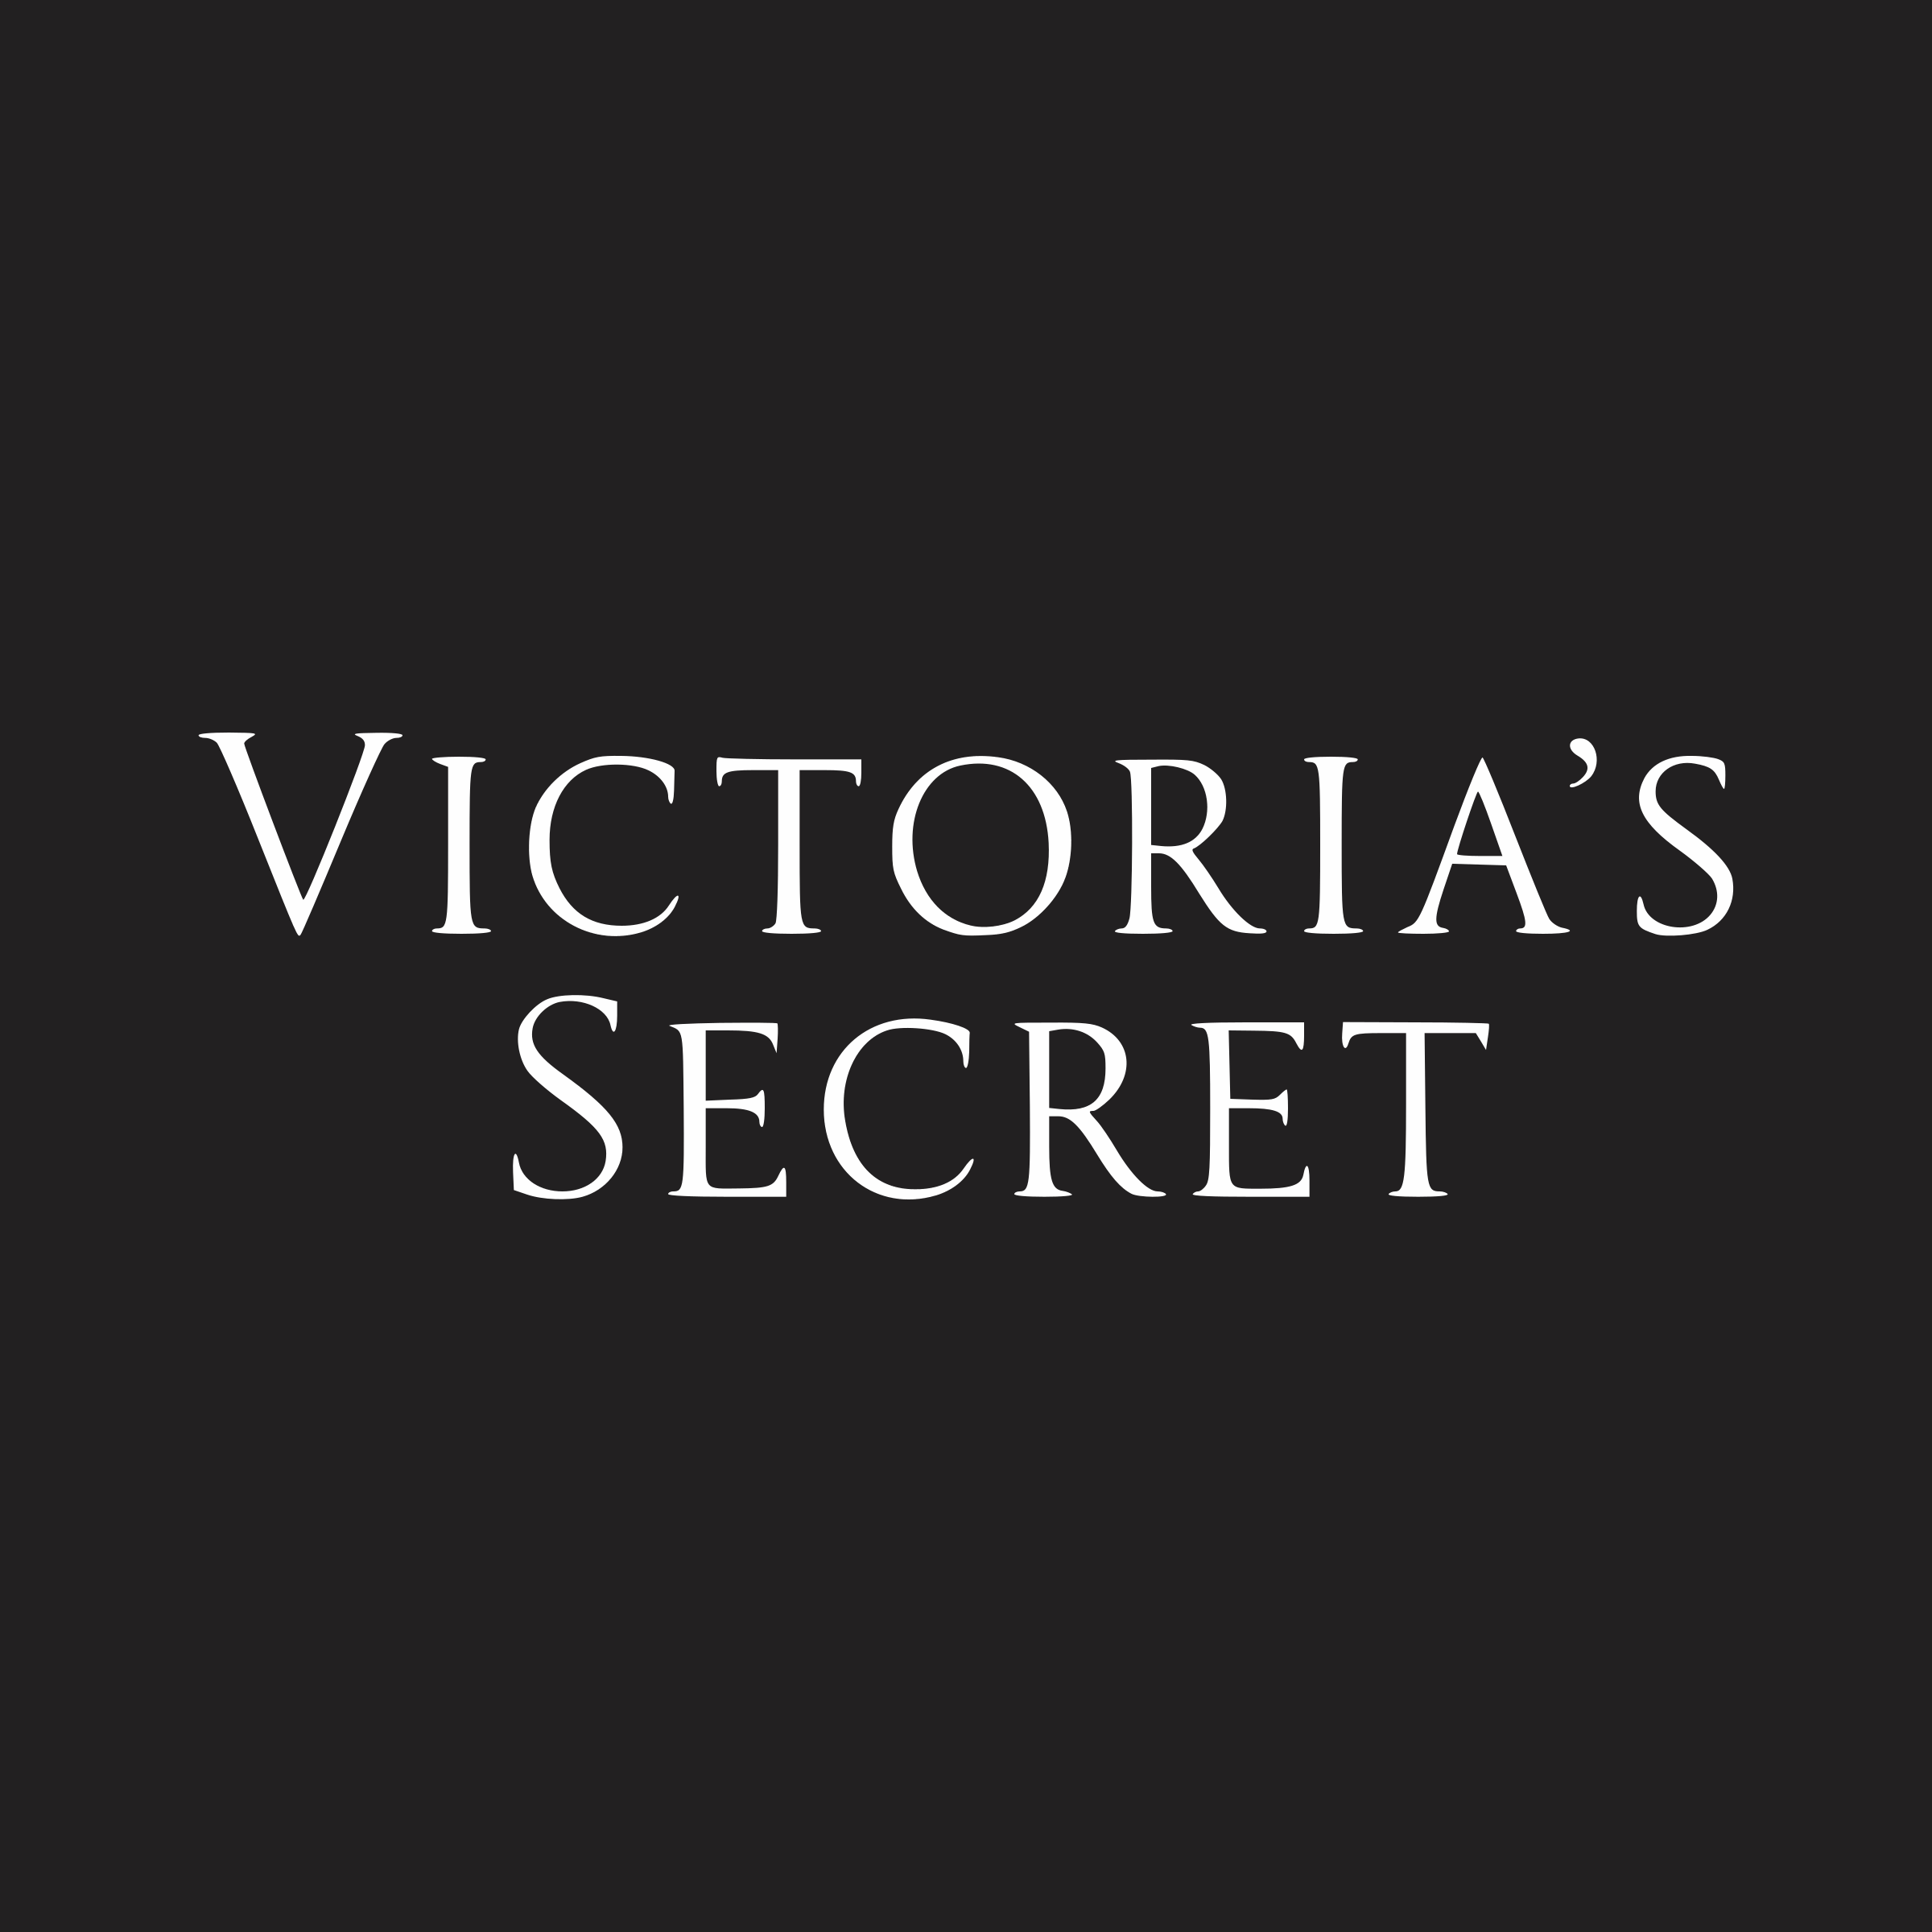 Black and White Victoria Secret Logo - Victoria's Secret Logo PNG Transparent & SVG Vector